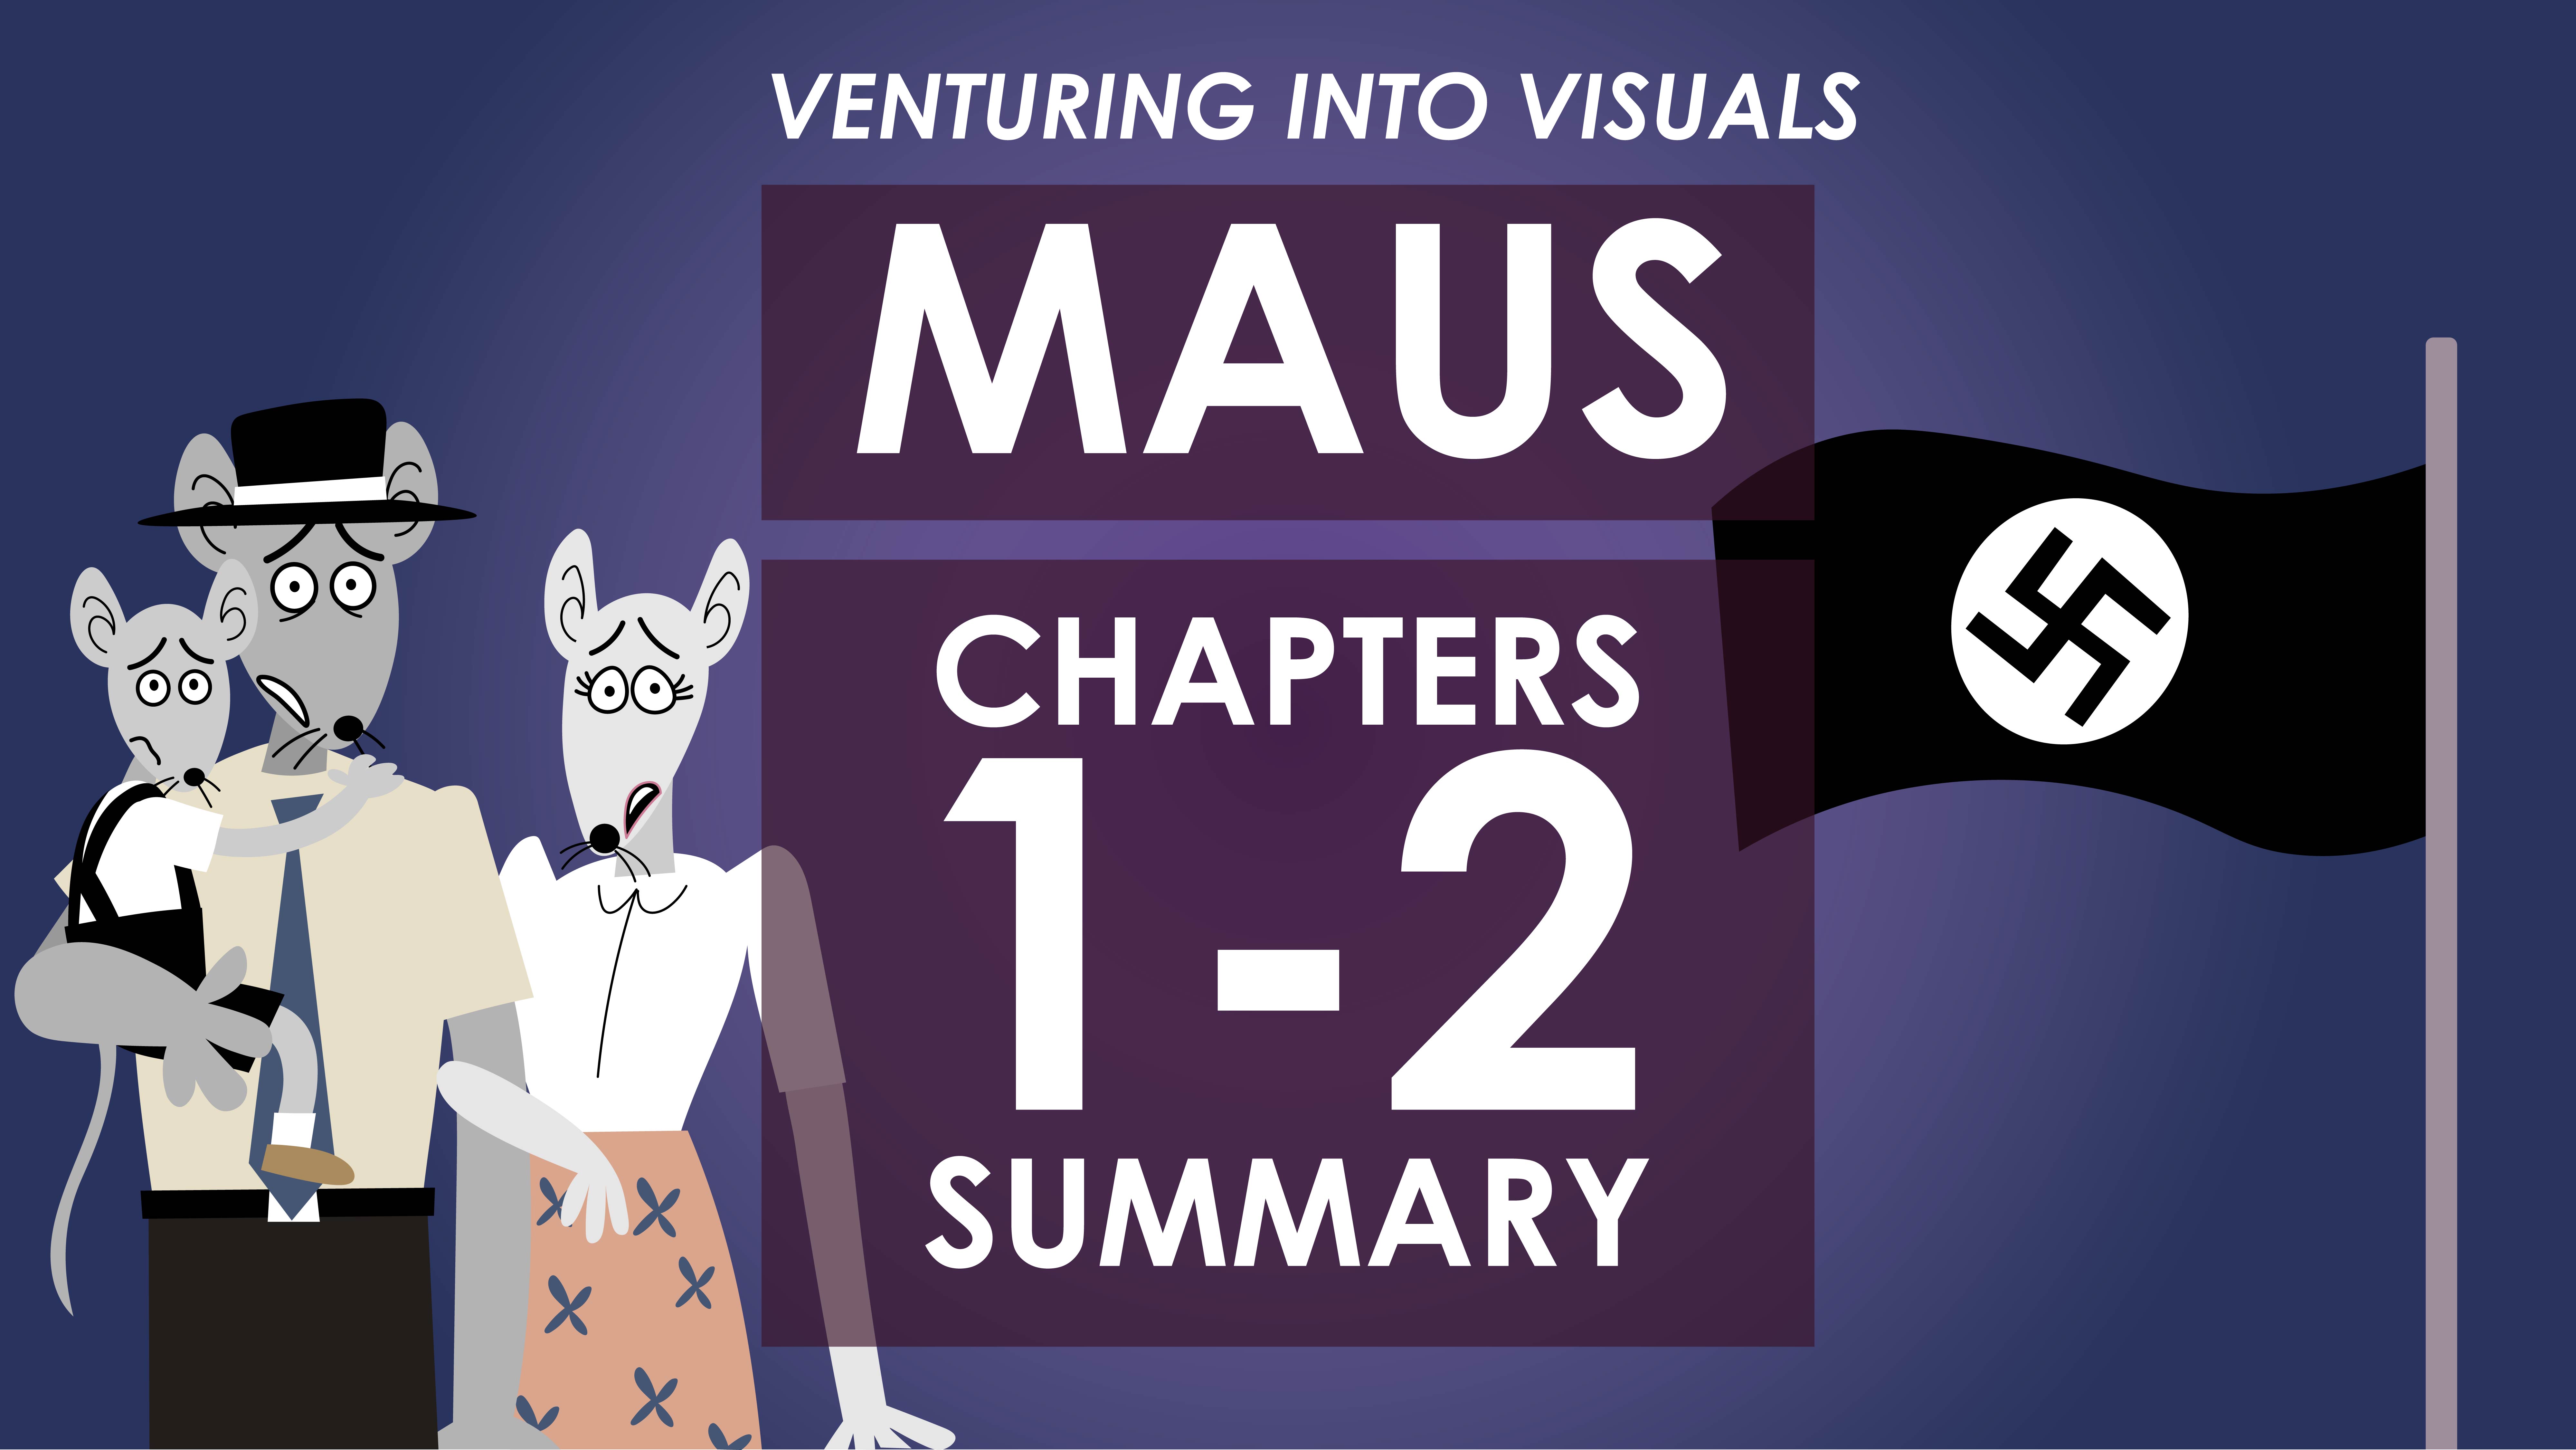 Maus - Art Spiegelman - Volume 1, Prologue & Chapters 1-2 Summary - Venturing Into Visuals Series